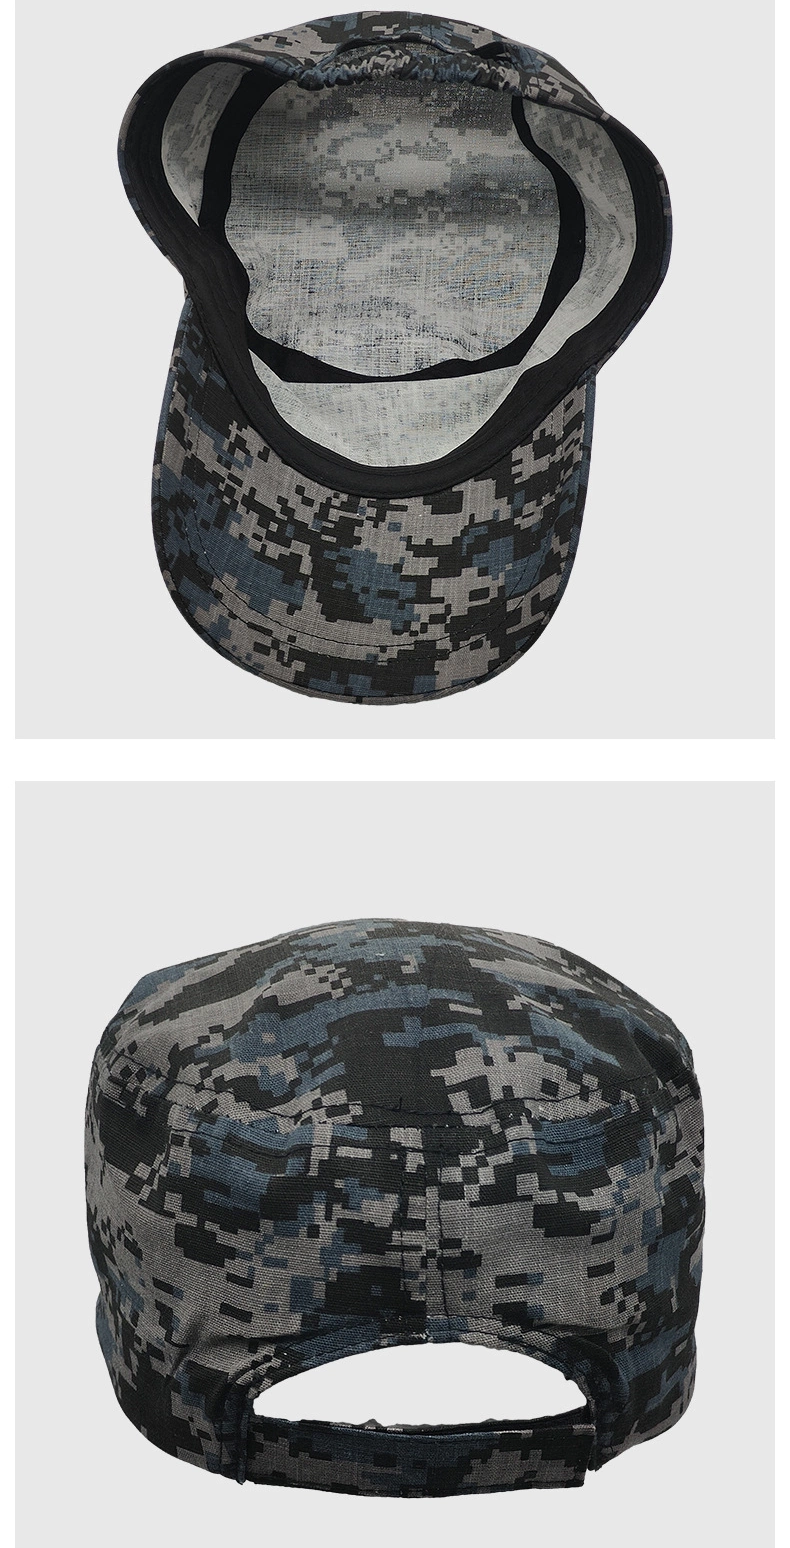 Custom Camouflage Military Shooting Cap, Training Flat Top Baseball Cap Hat